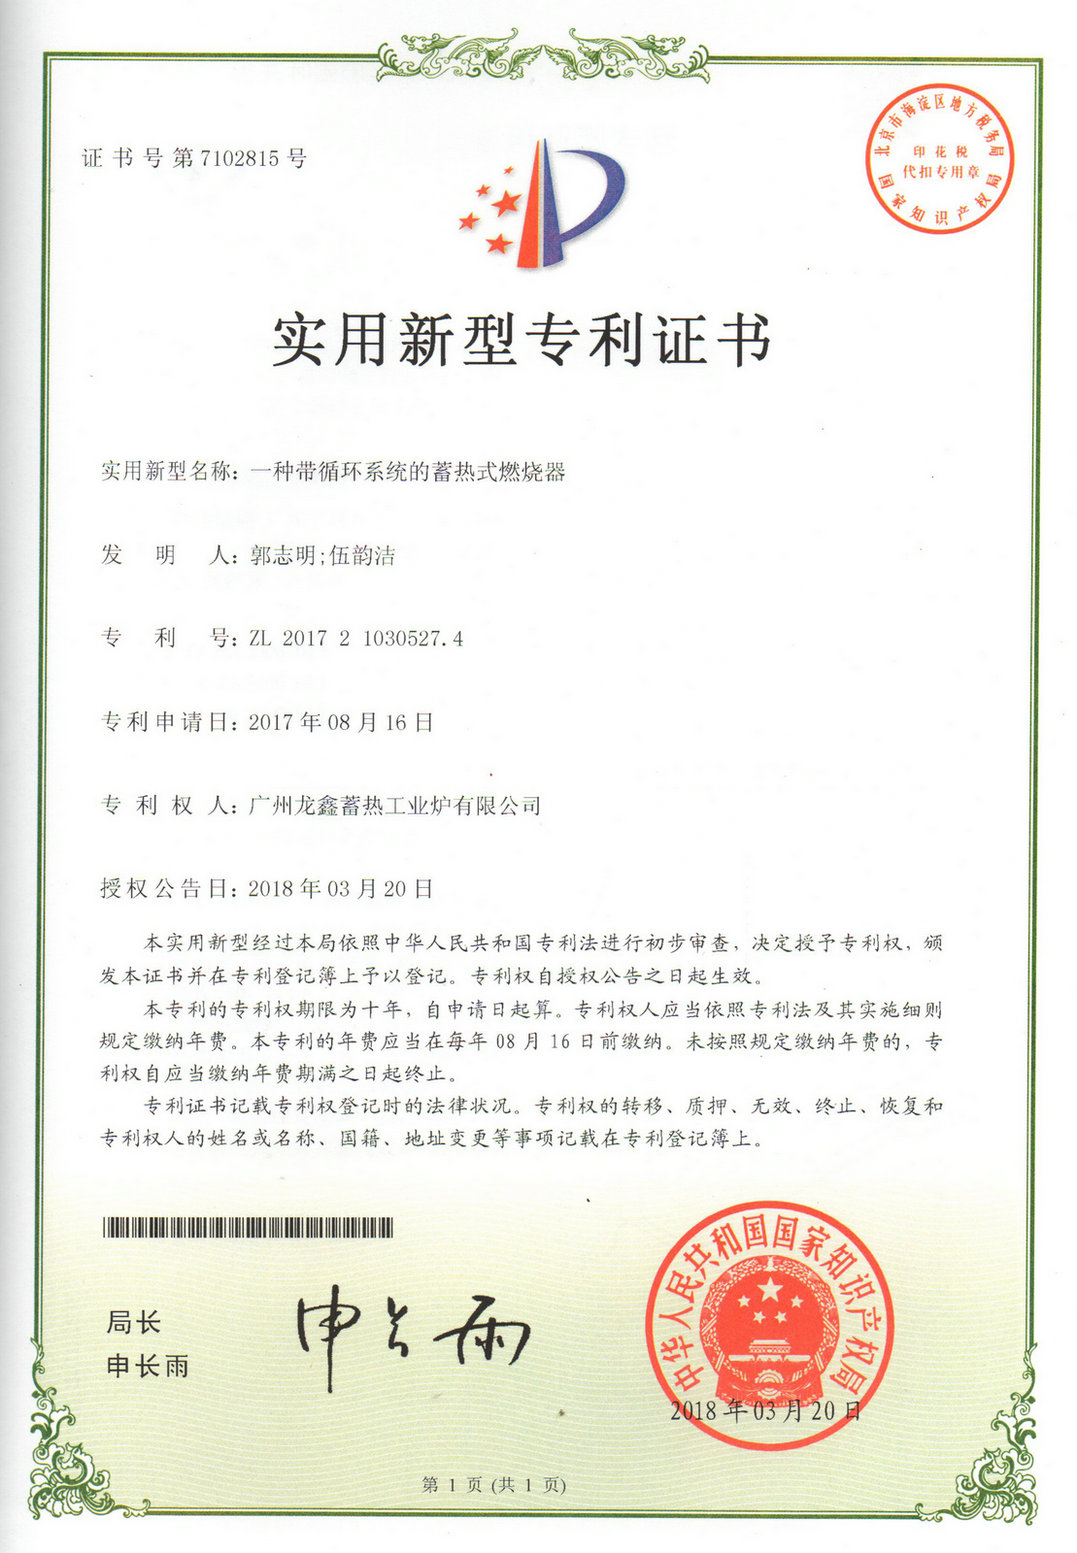 Patent certificate: a regenerative burner with circulating system